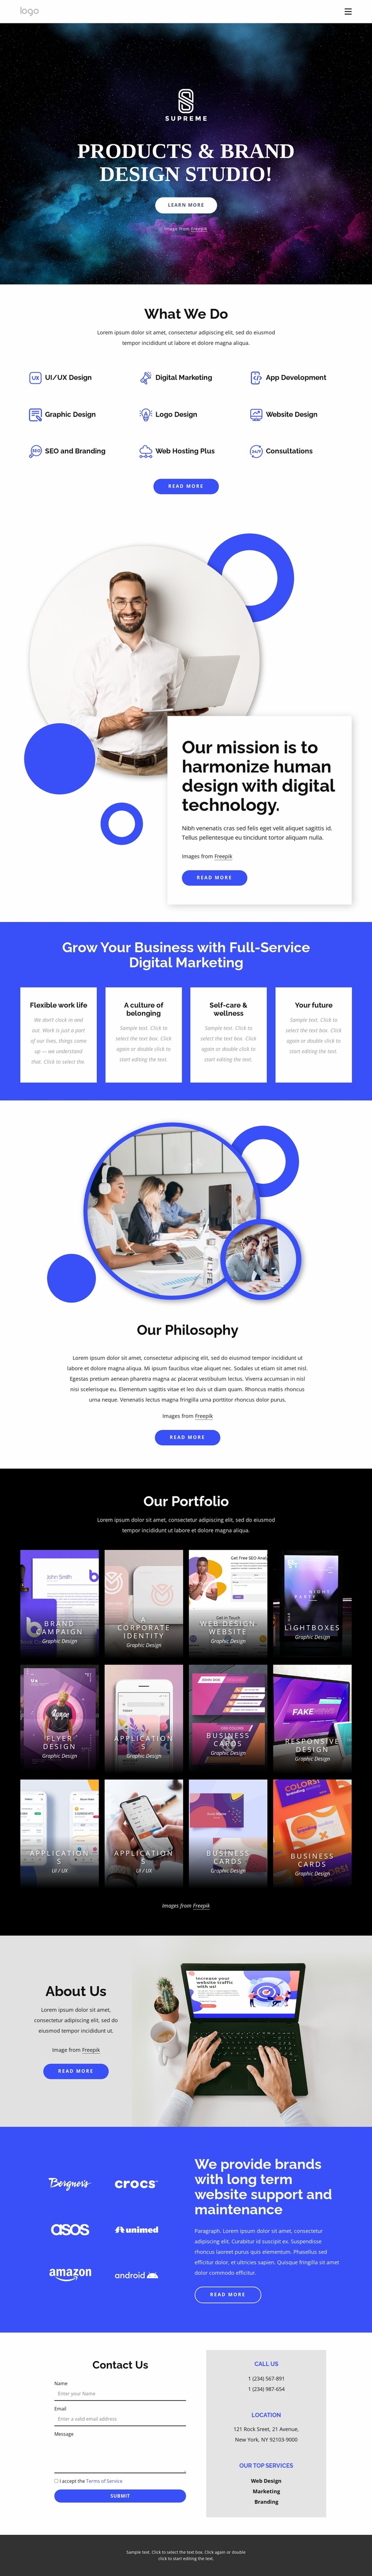 Products and brand design studio Ecommerce Website Design